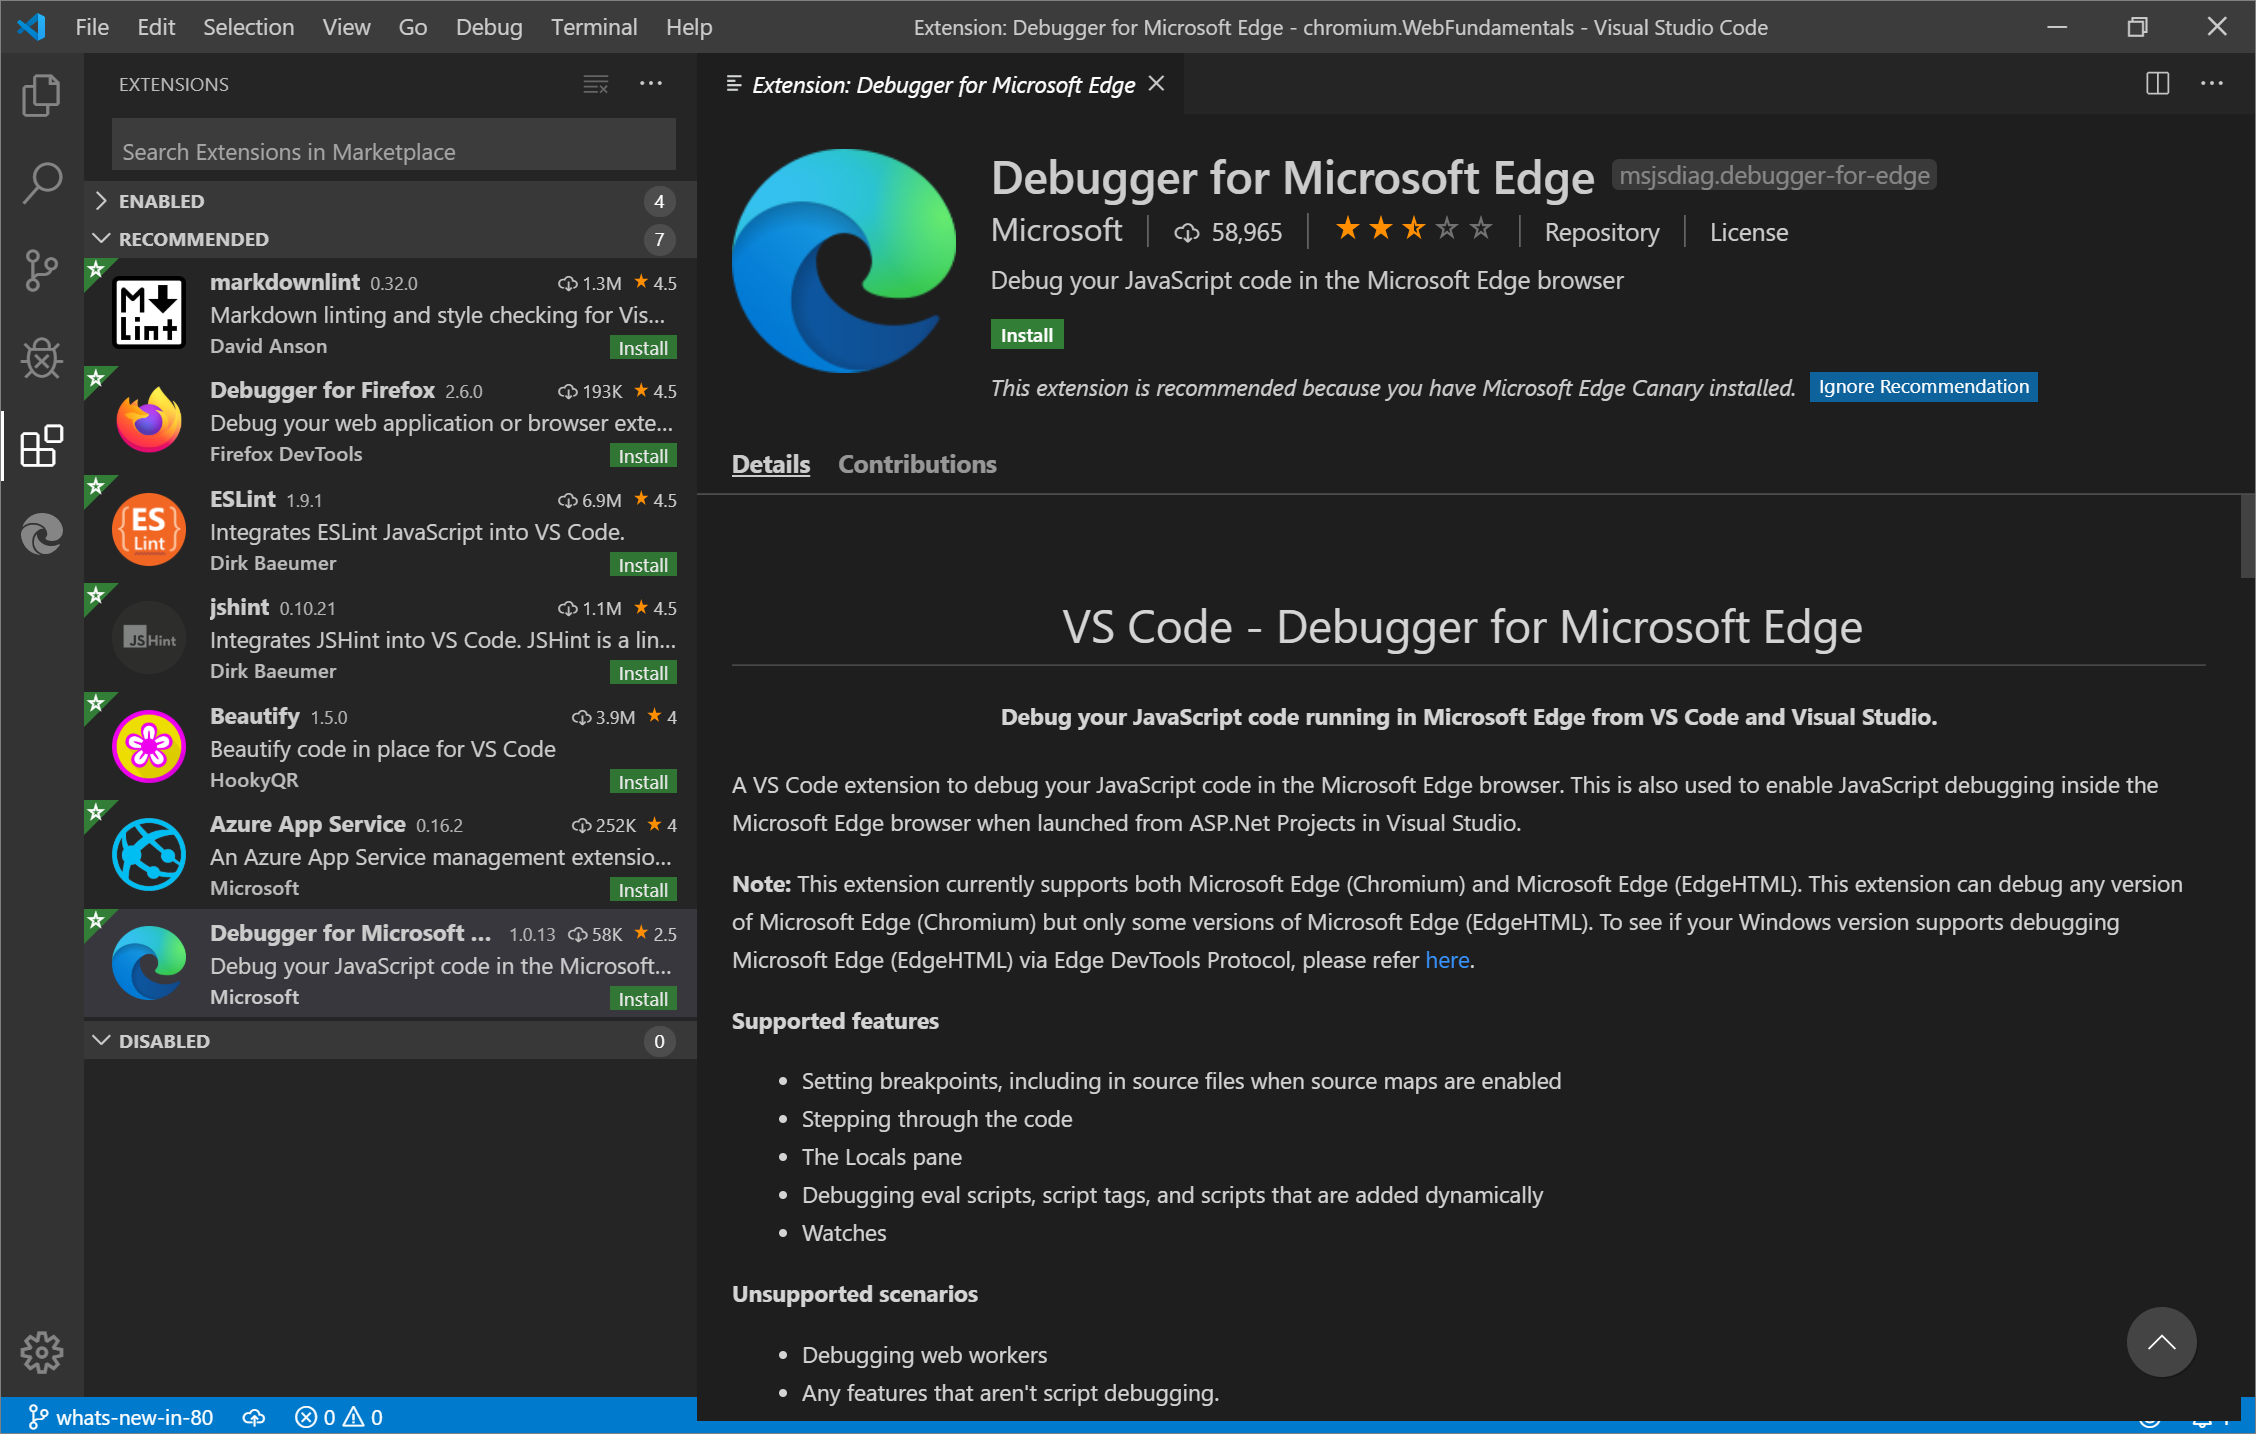 The Debugger for Microsoft Edge Extension in Visual Studio Code.